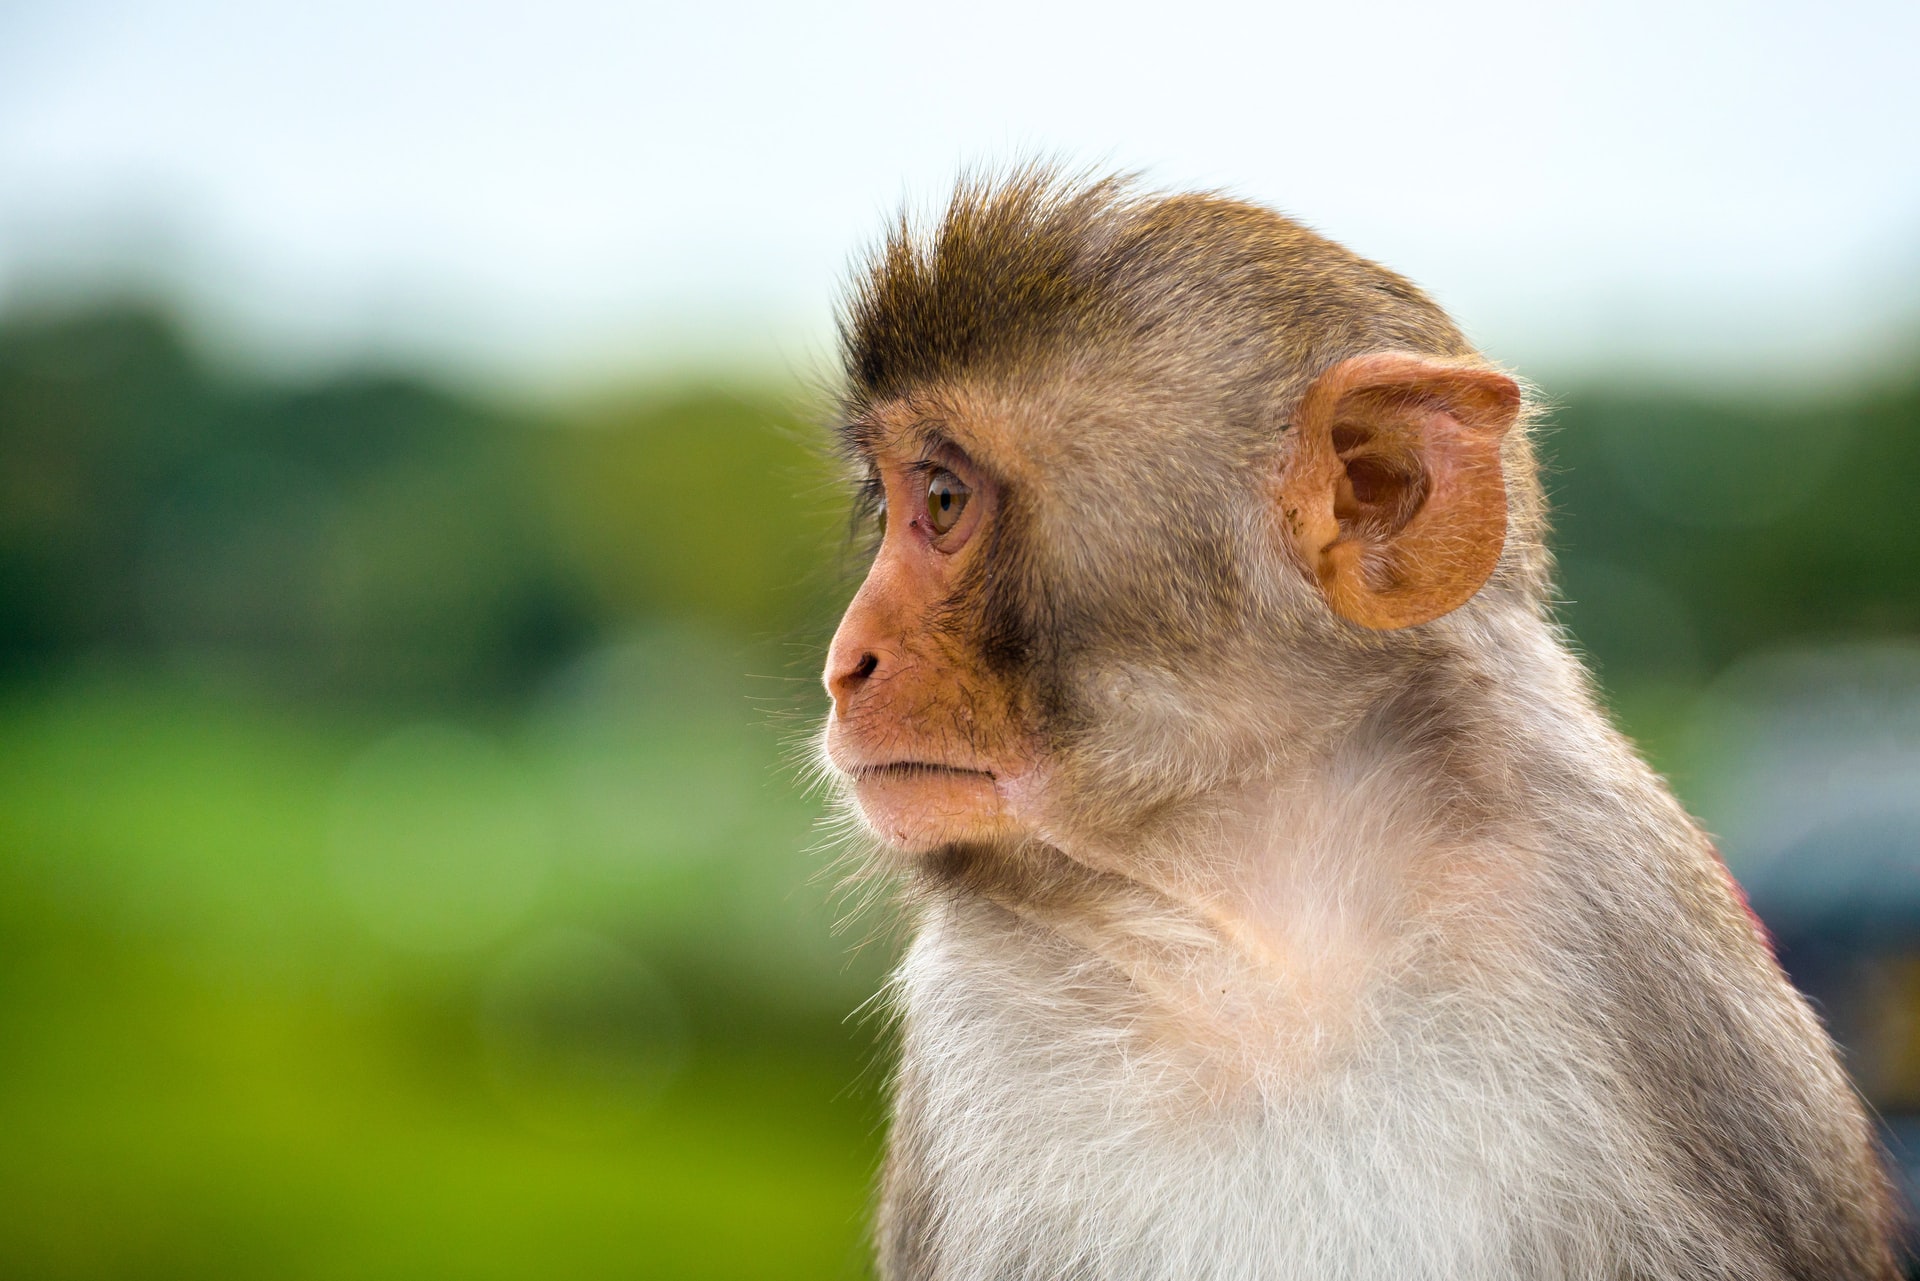 Chegou: Distrito Federal tem primeiro caso de varíola dos macacos